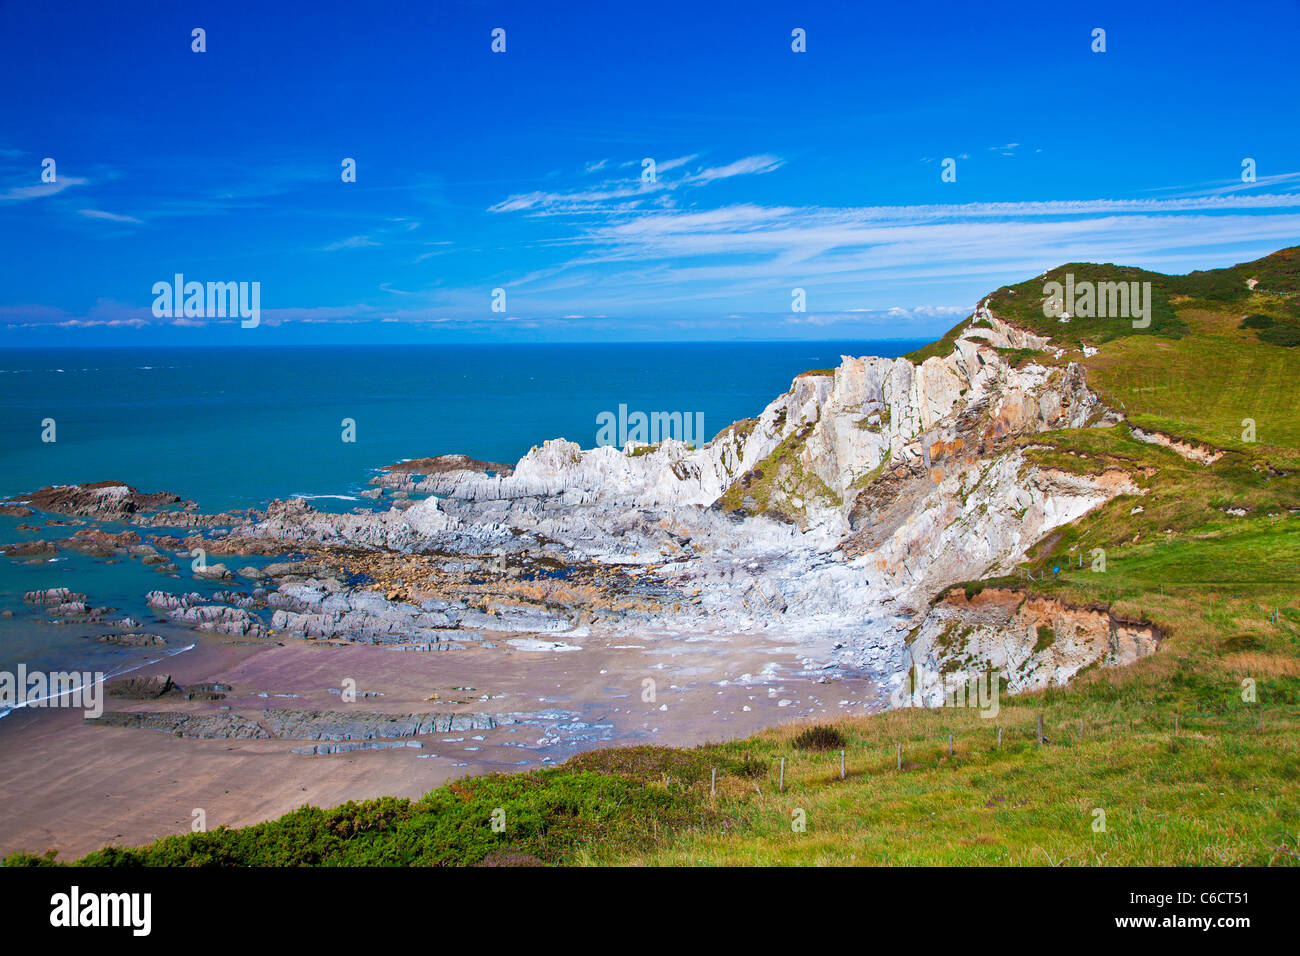 View of the North Devon coastline at Rockham Bay, near Woolacombe and Morthoe, Devon, England, UK Stock Photo